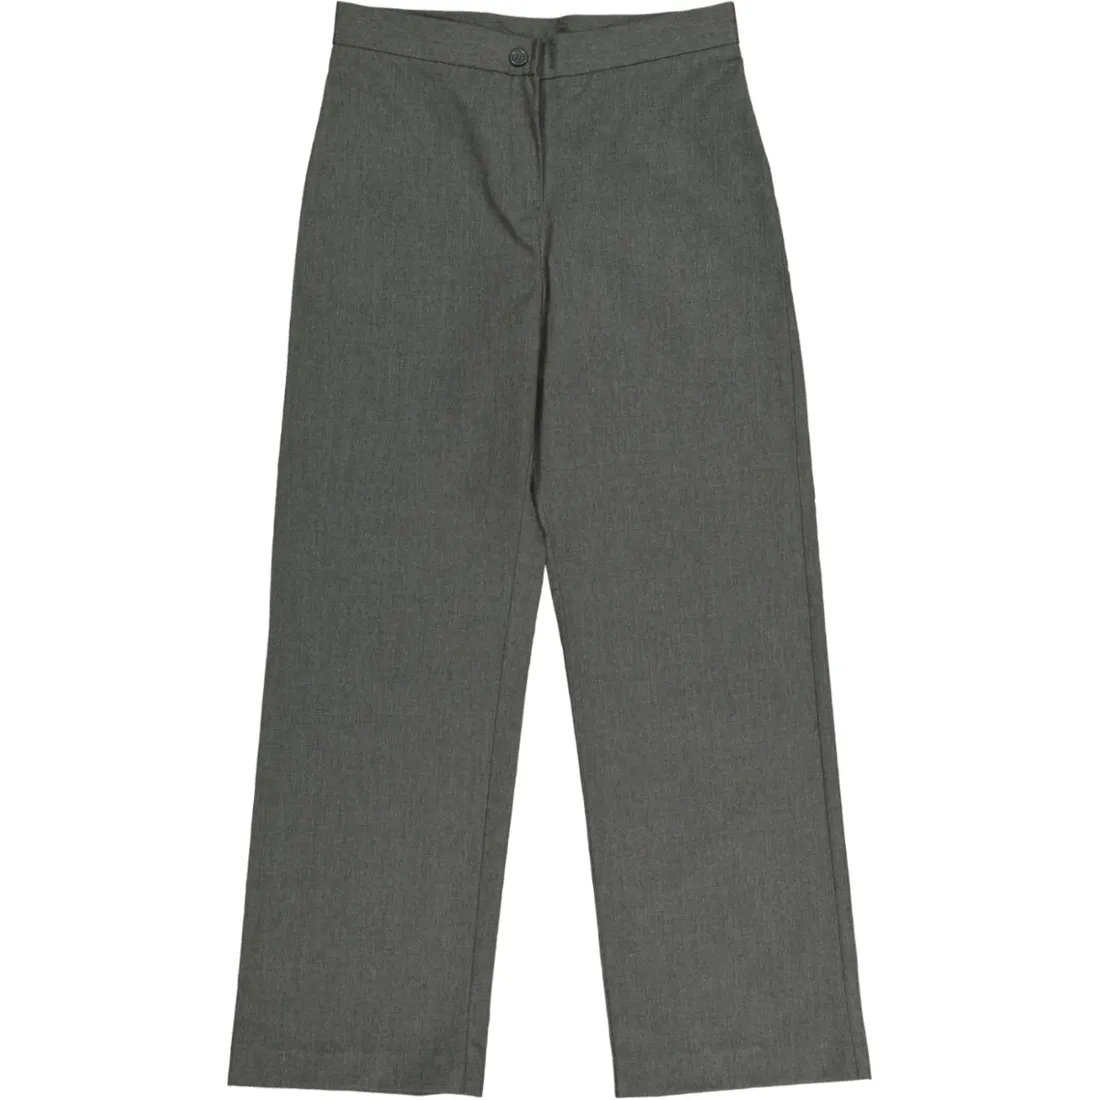 Grey School Trousers | School | PEP